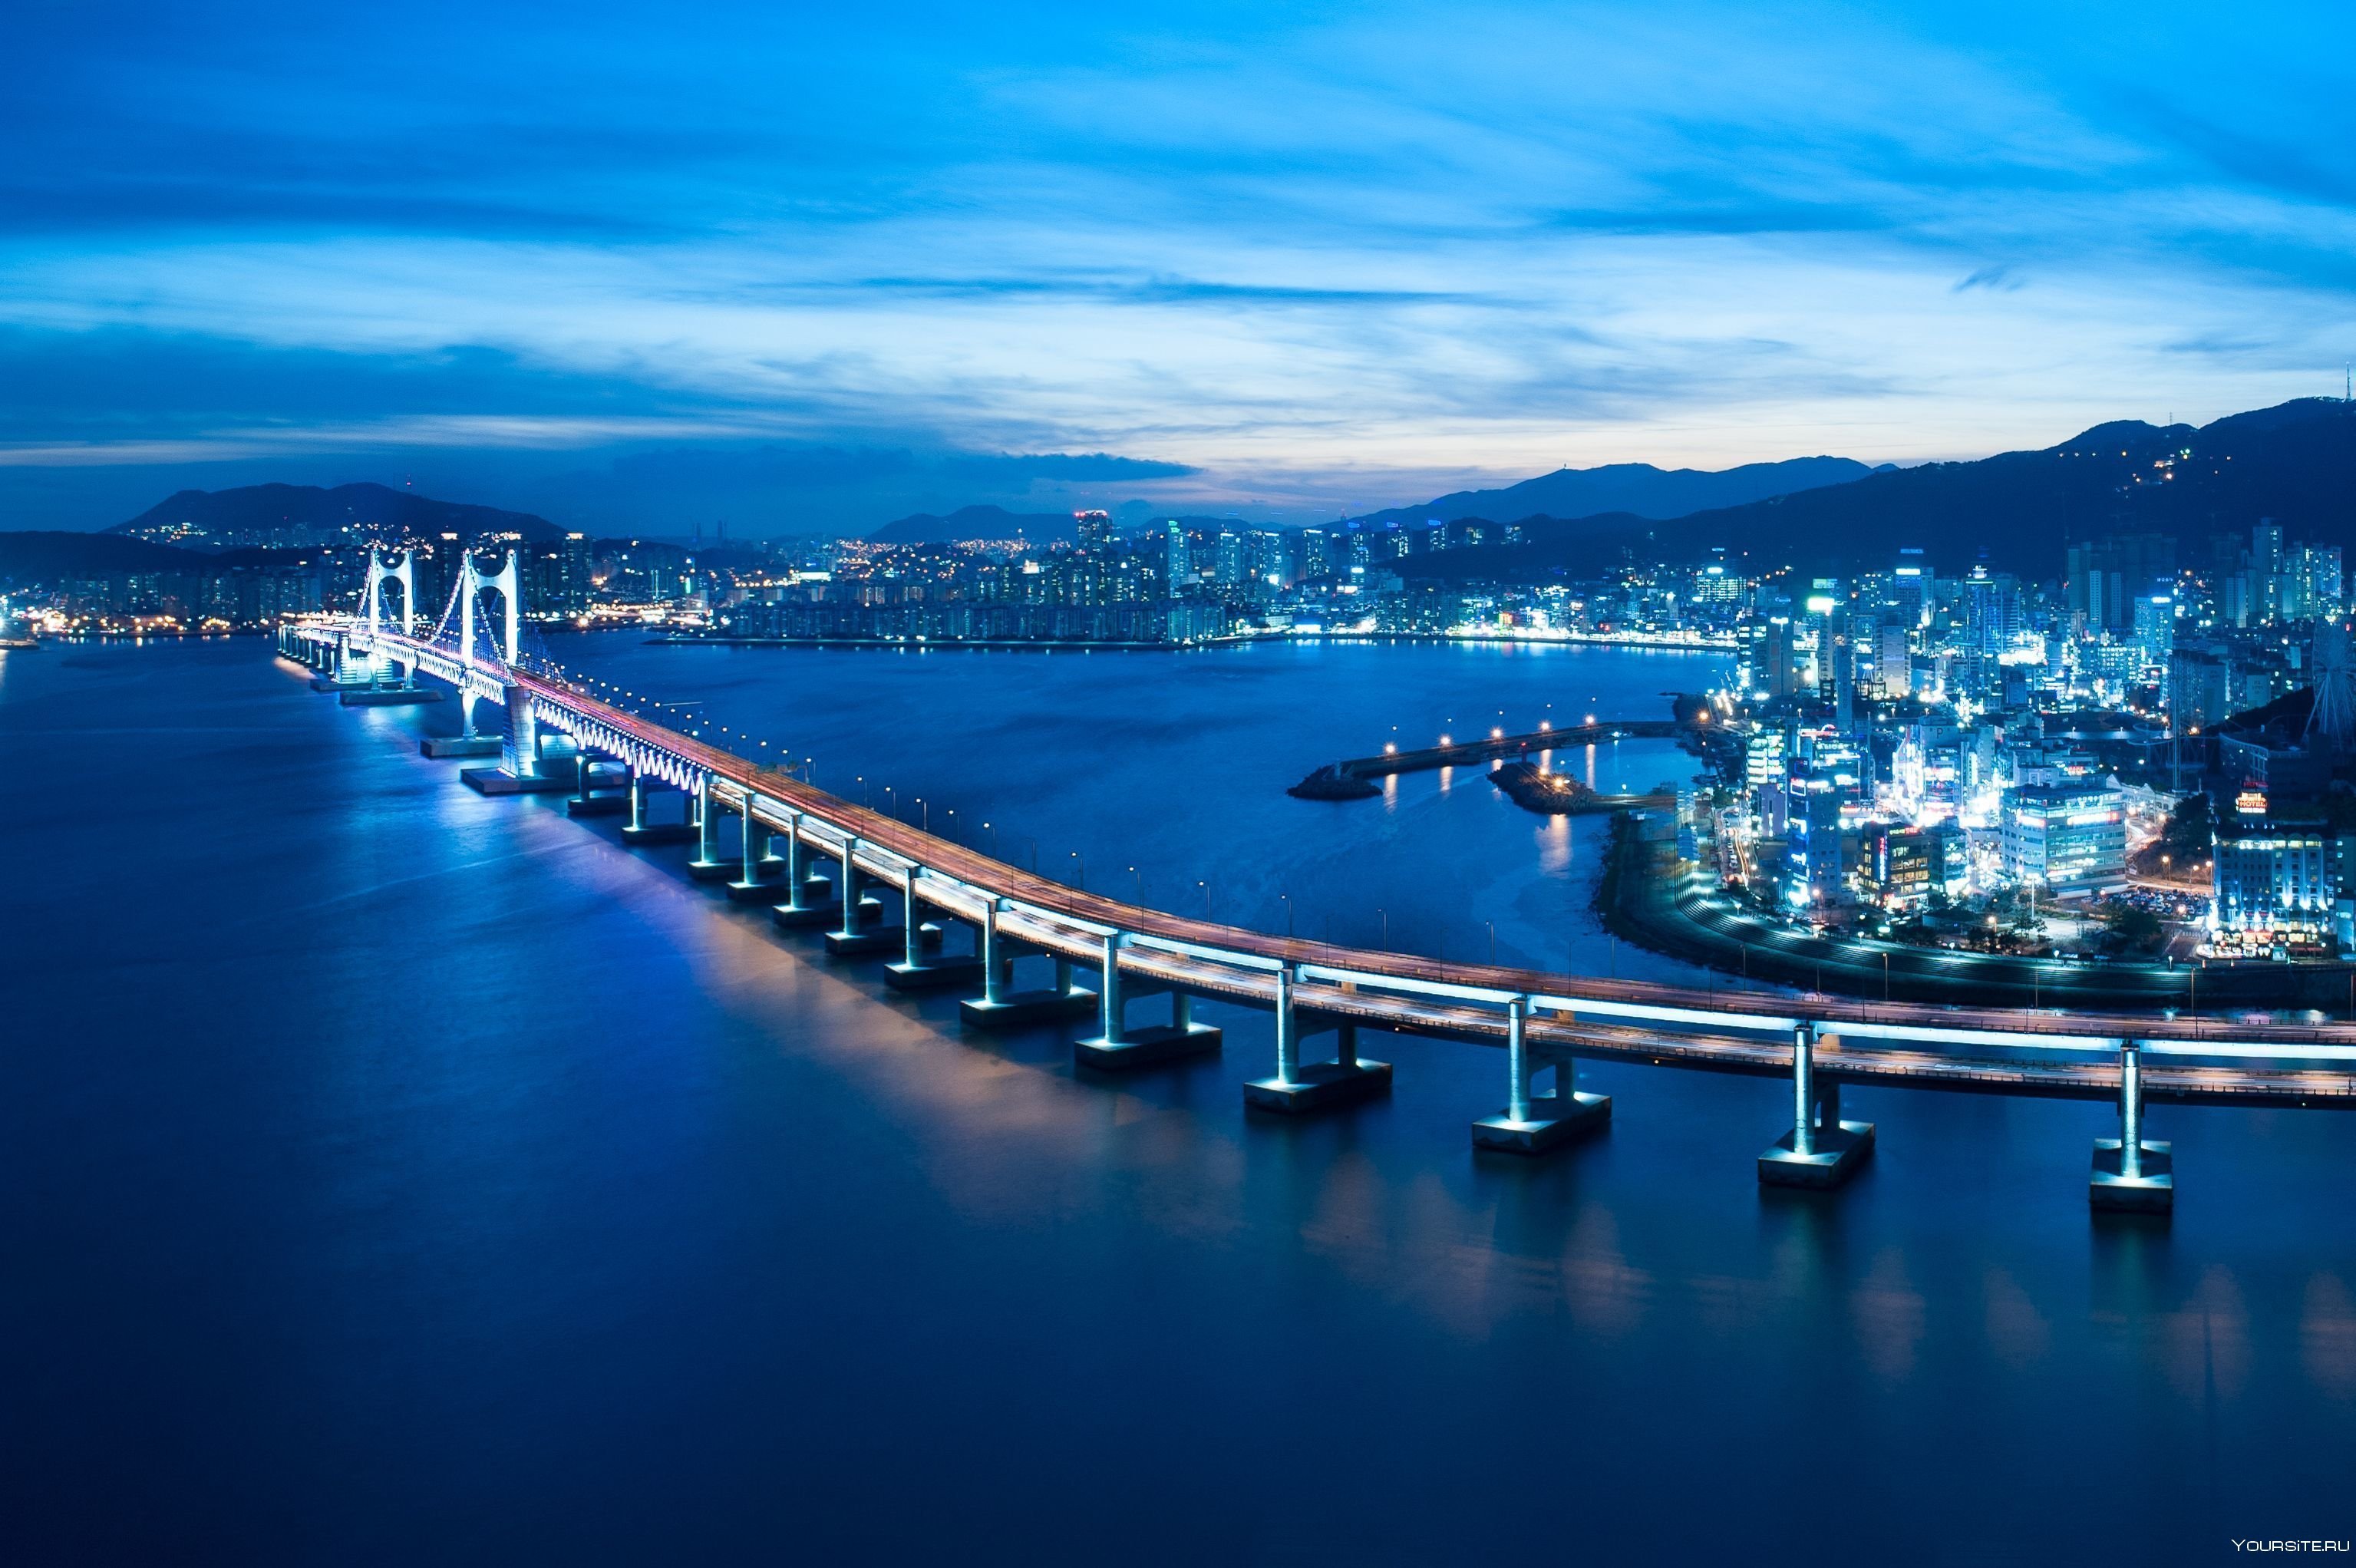 Город в пусан 3. Пусан мост Кванан. Мост в Южной Корее Пусан. Город-метрополия Пусан. Мосты города Пусан Южная Корея.